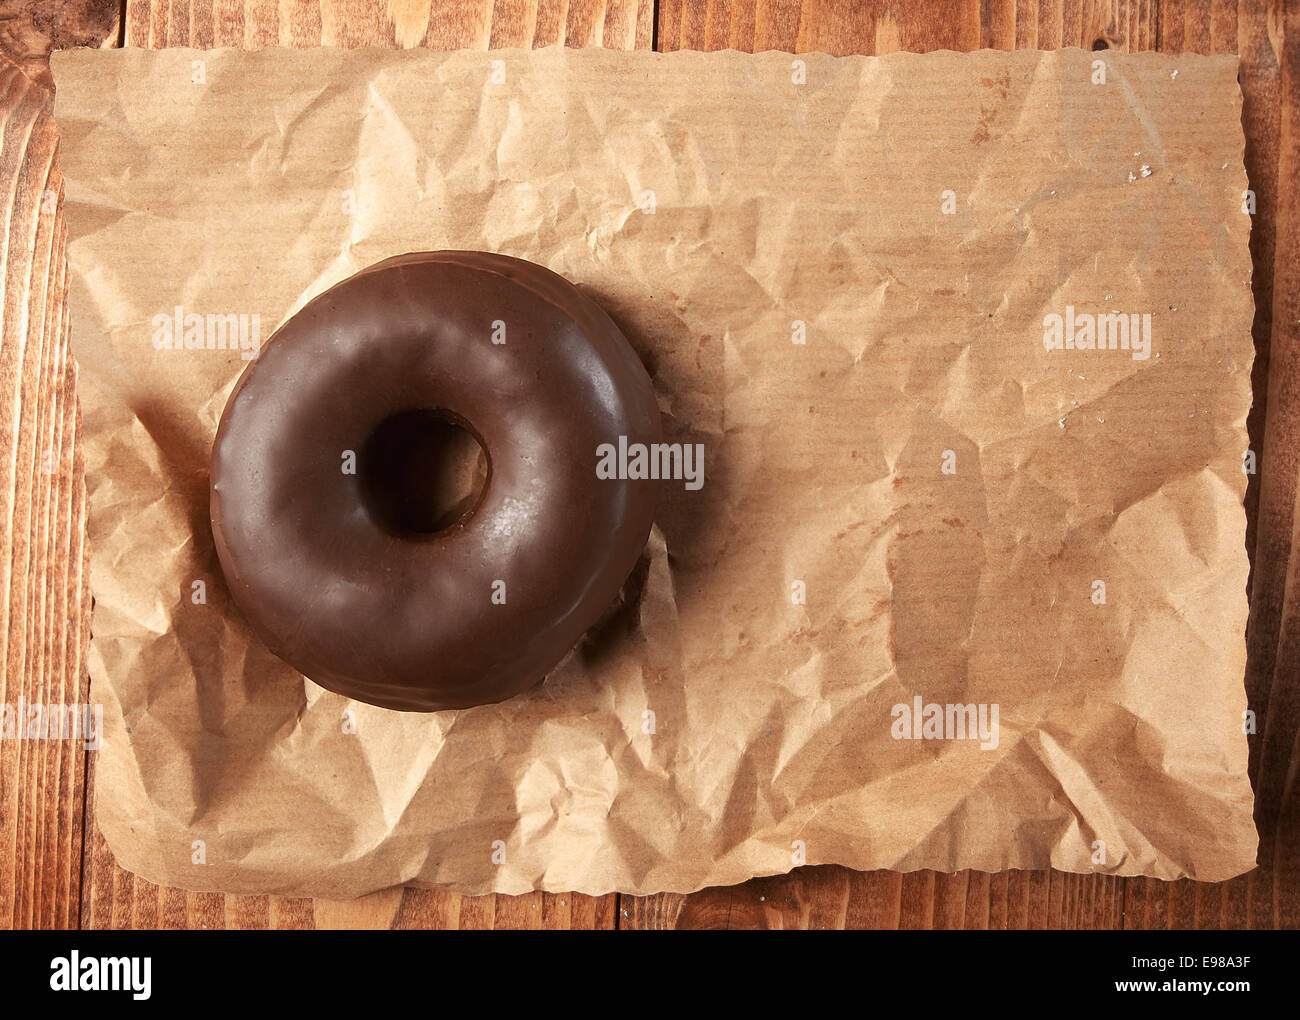 Tasty chocolate doughnut on a paper, high angle Stock Photo